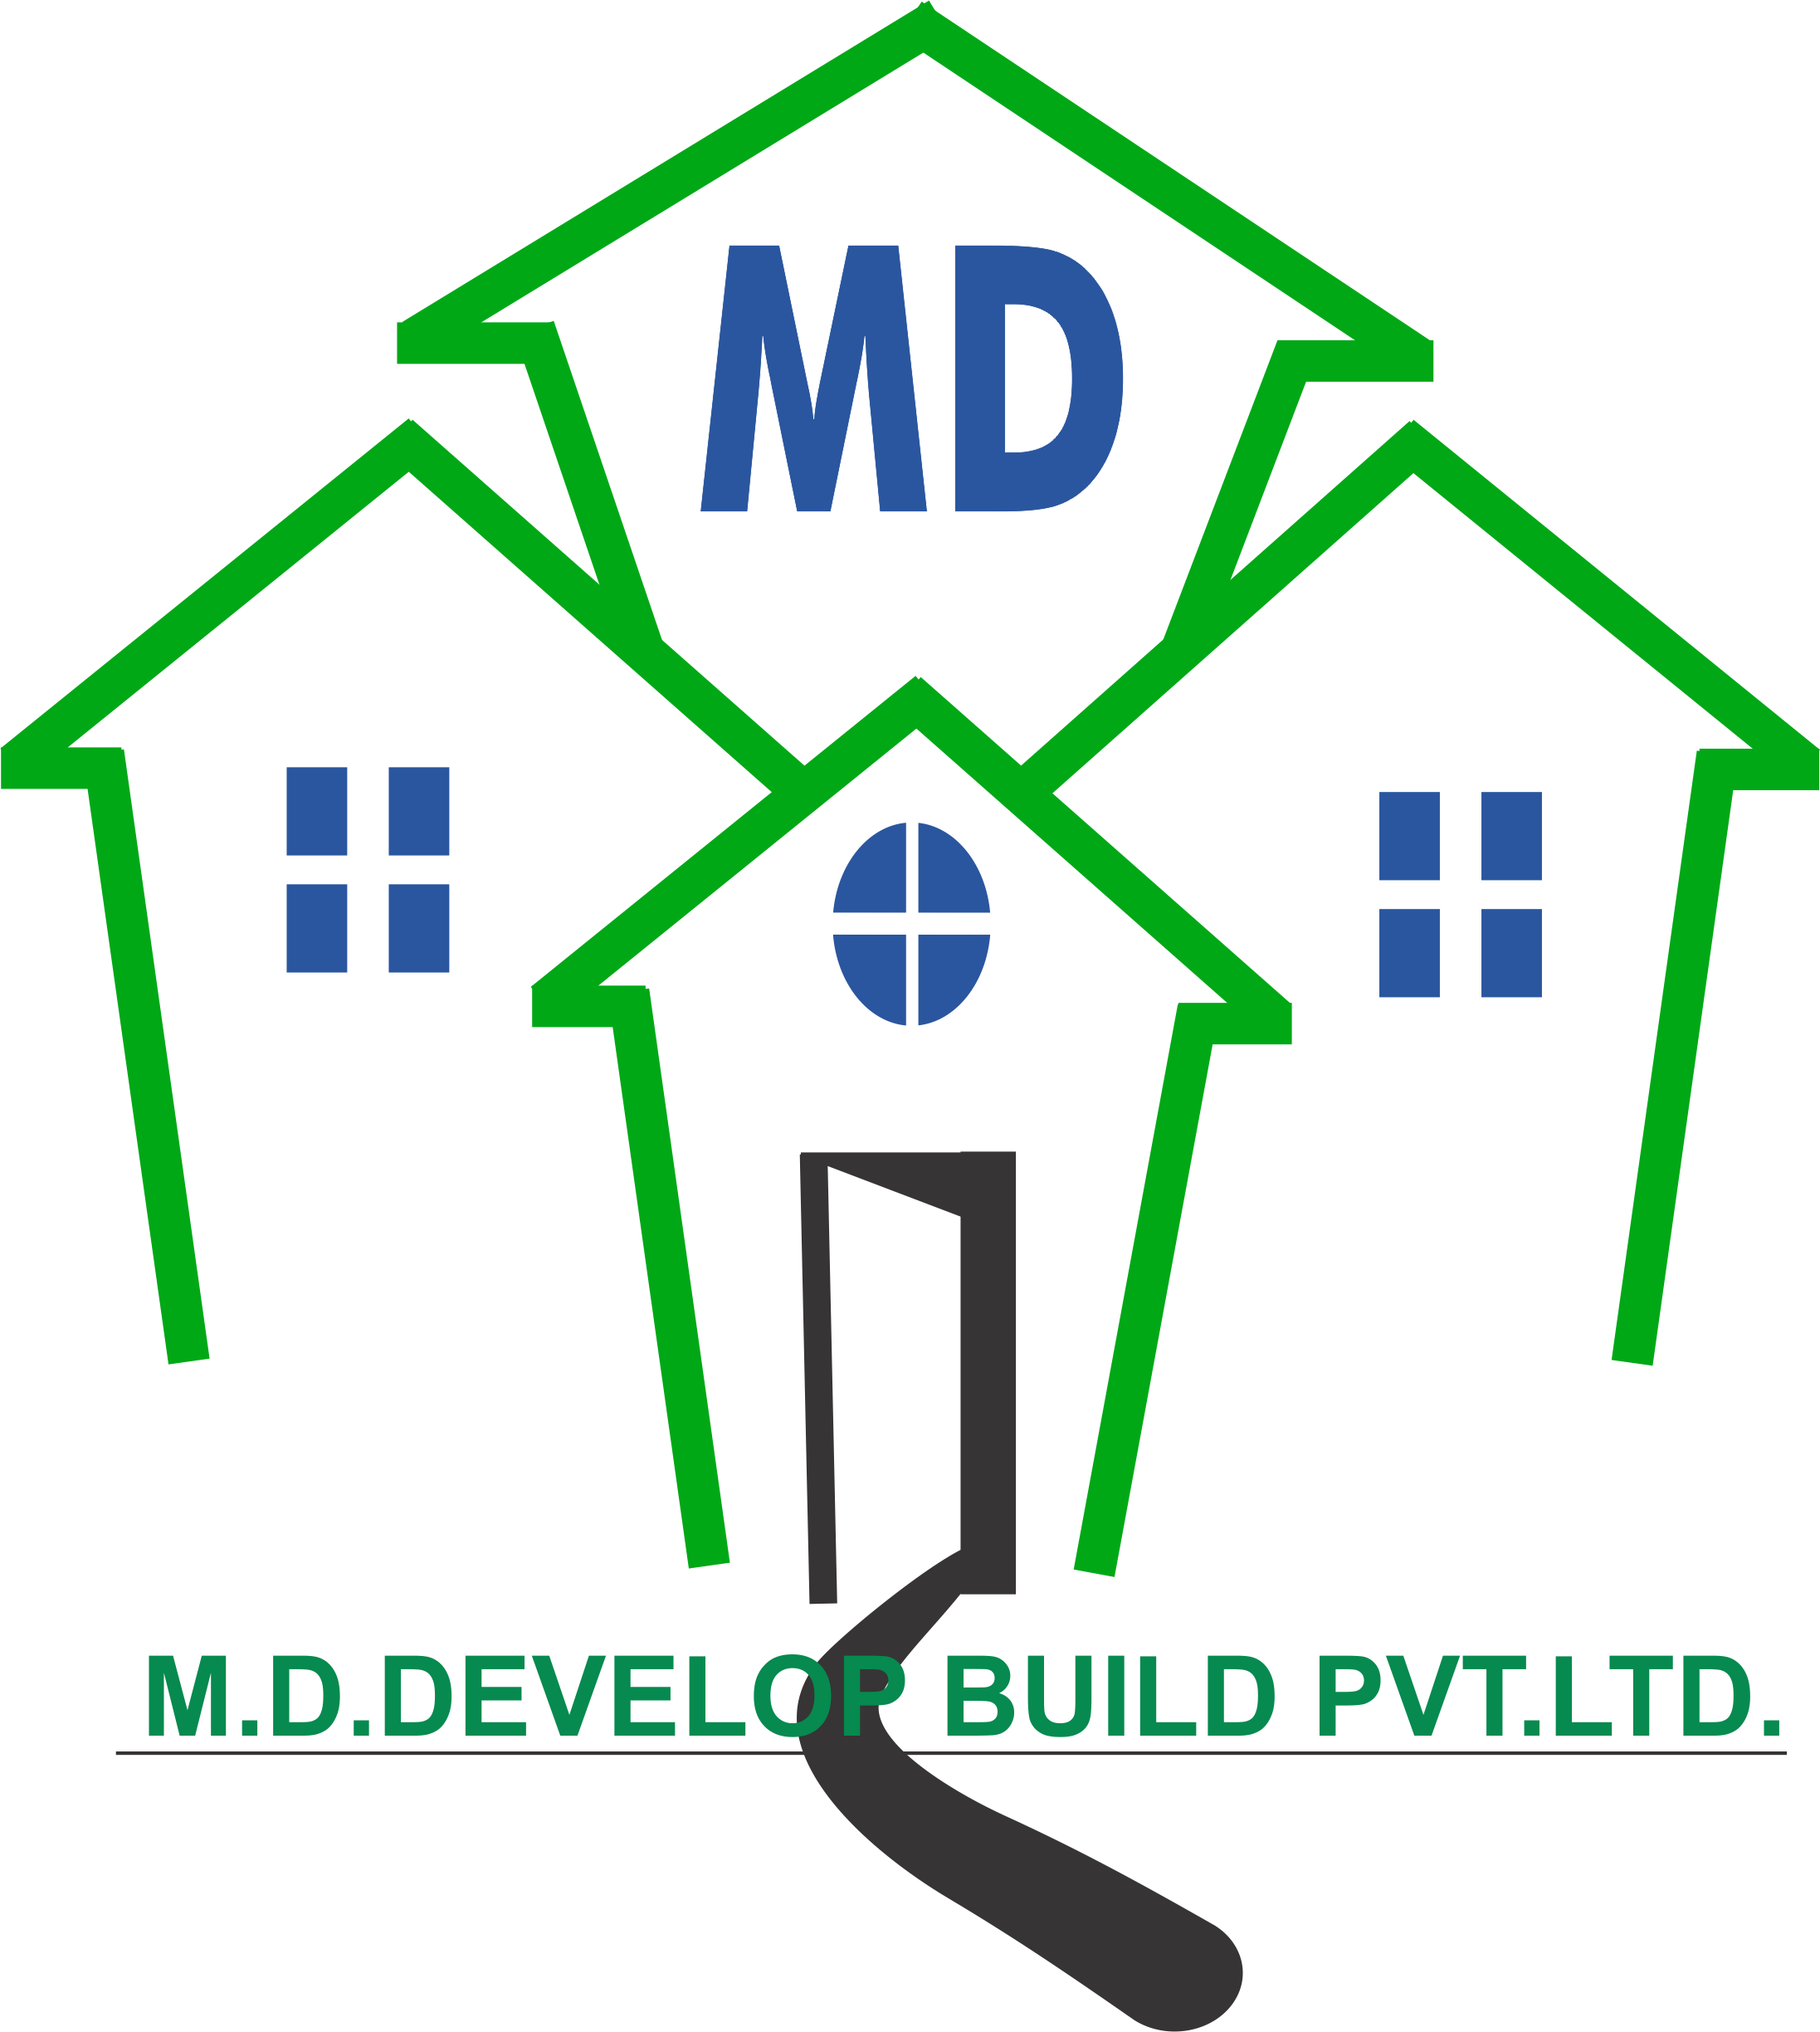 MD DEVELOP BUILD